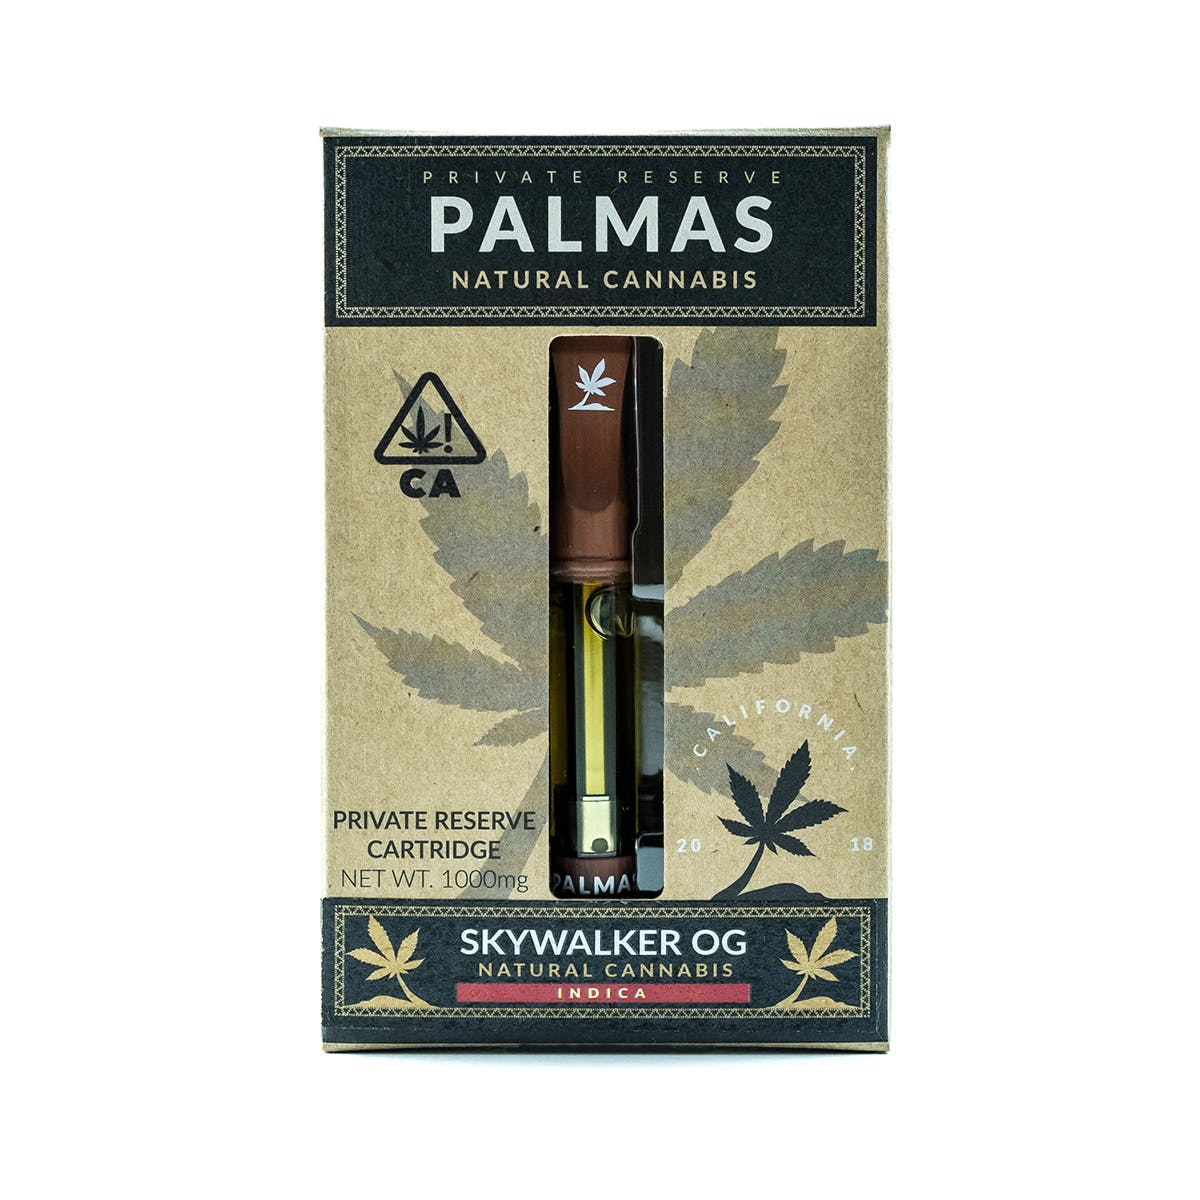 marijuana-dispensaries-kush-klub-collective-in-los-angeles-palmas-private-reserve-cartridge-skywalker-og